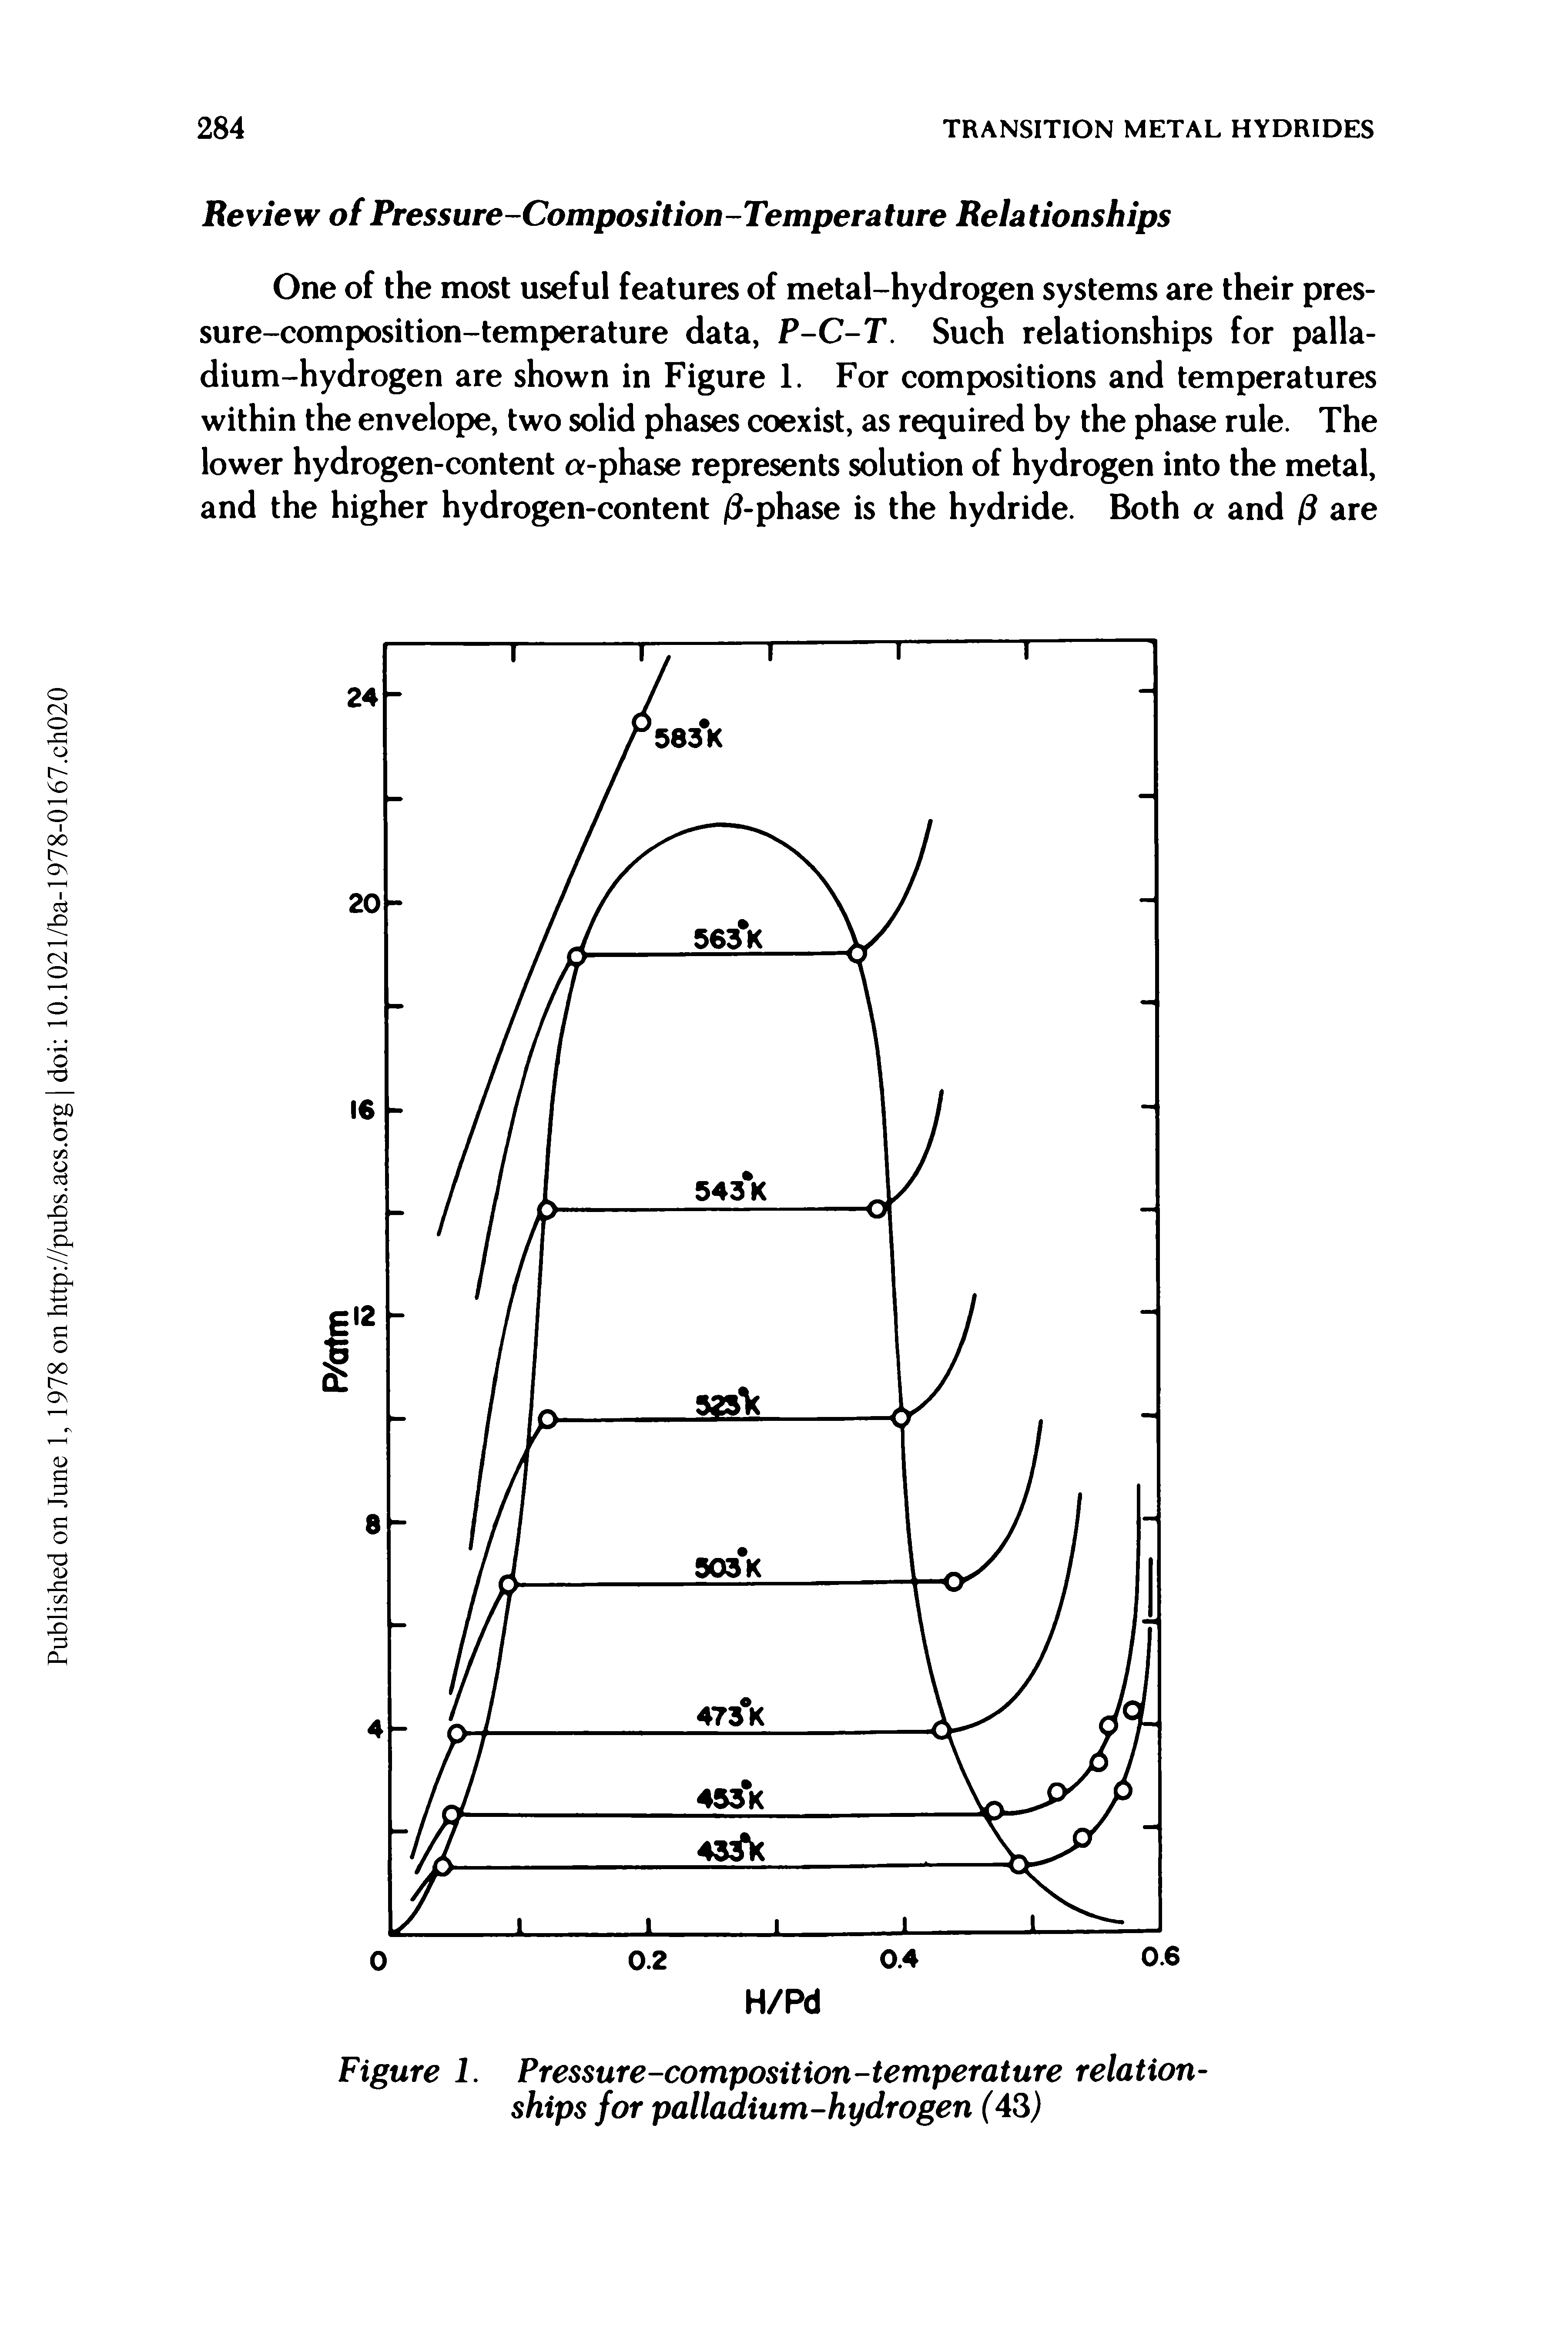 Figure 1. Pressure-composition-temperature relationships for palladium-hydrogen (43)...